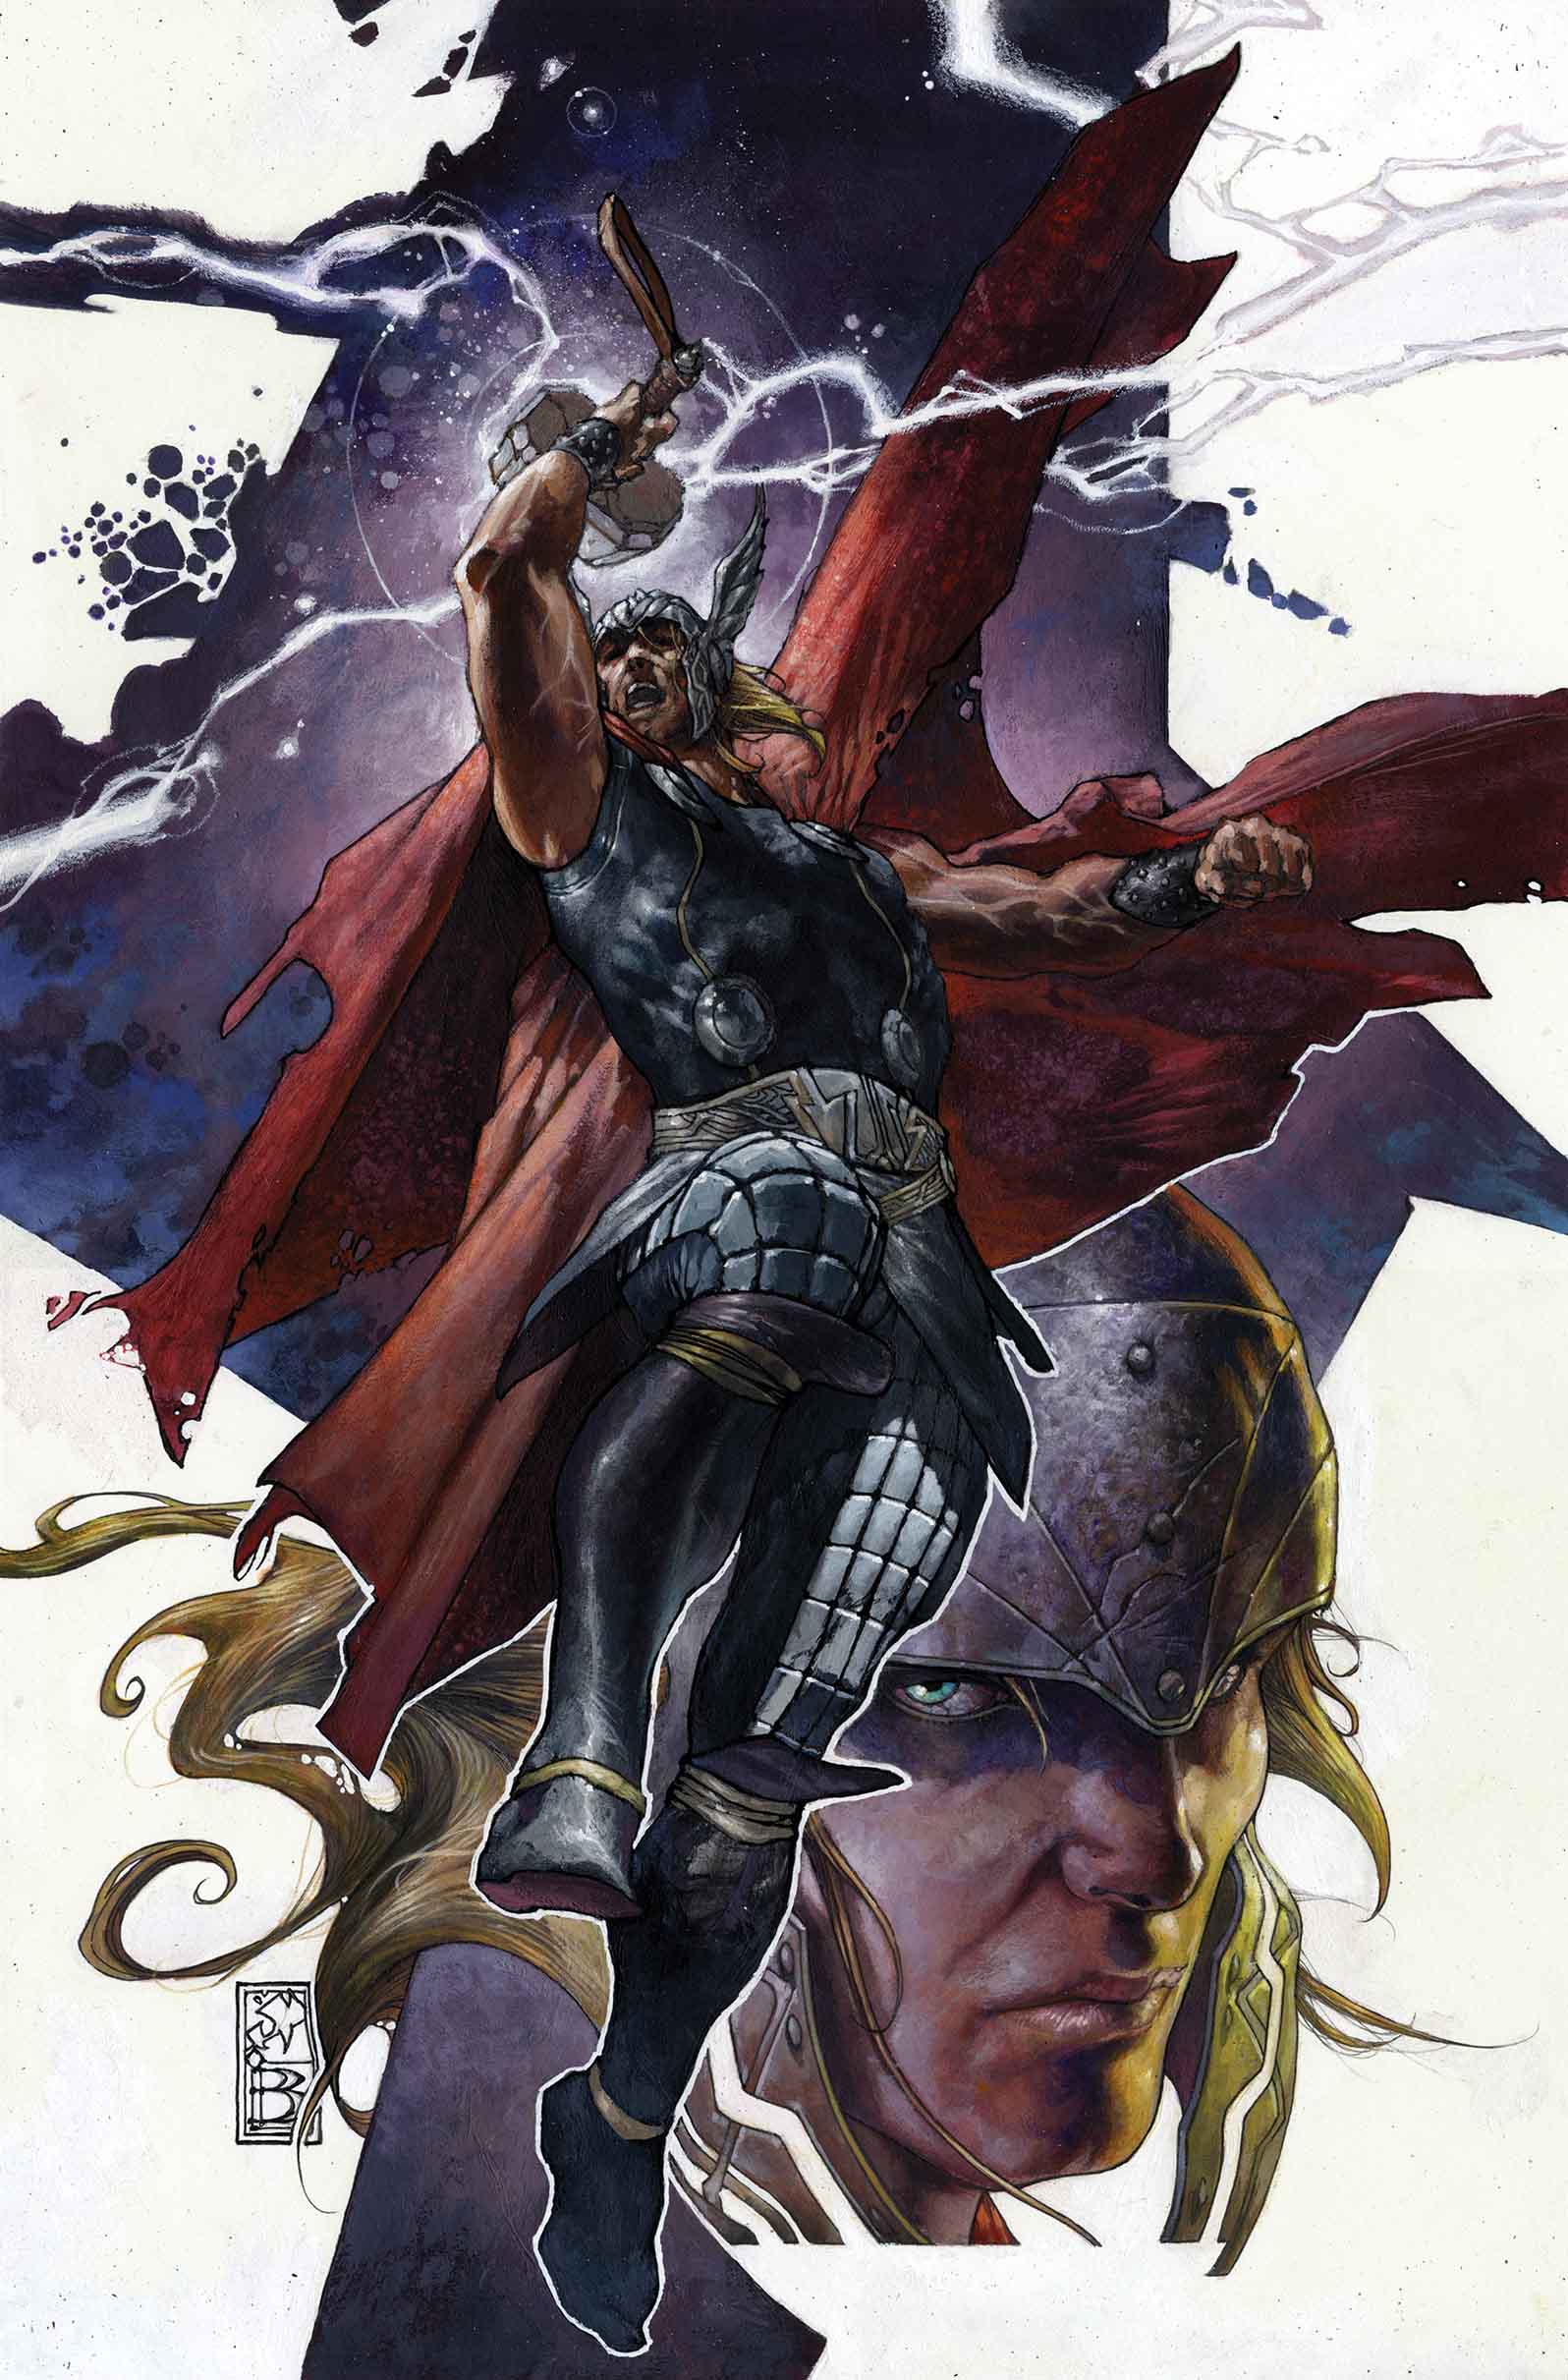 Thor: God Of Thunder HD wallpapers, Desktop wallpaper - most viewed